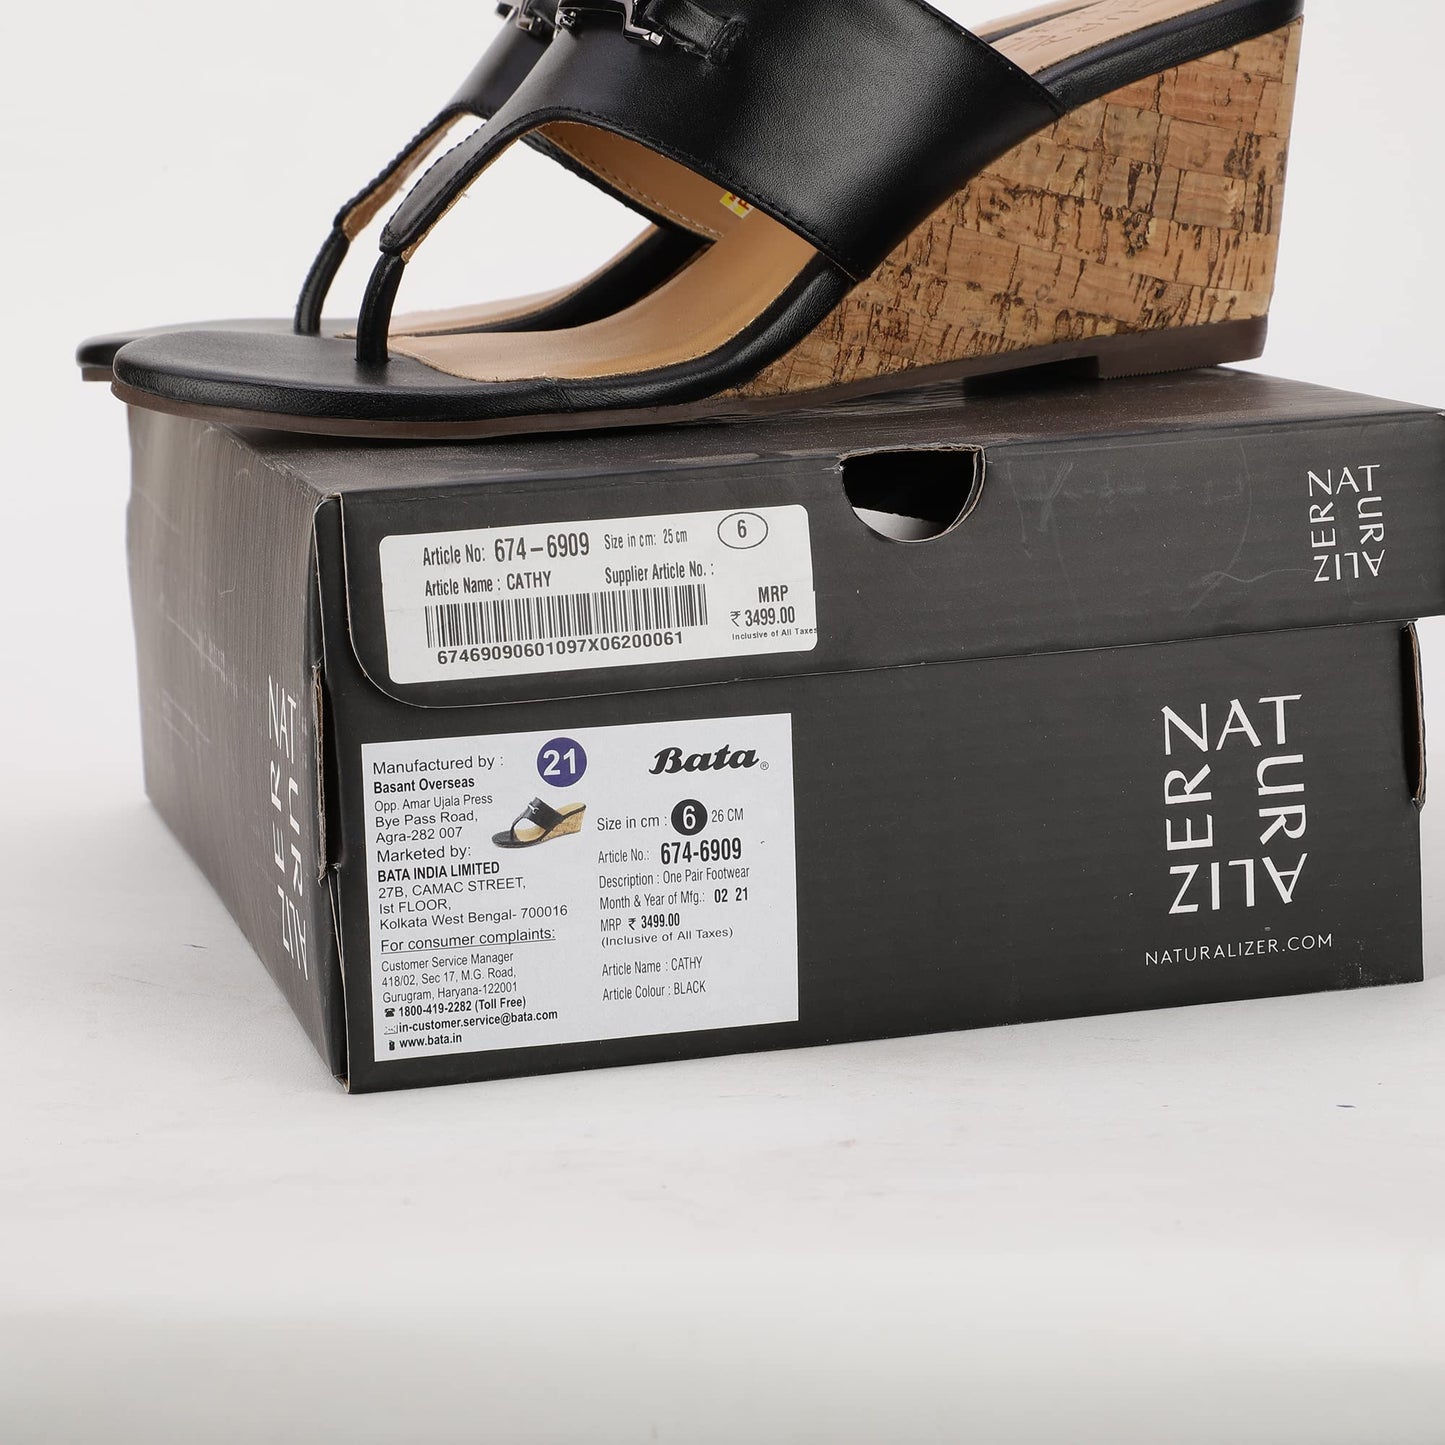 Naturalizer Women's CATHY Black Leather Slipper - 3 UK (6746909)